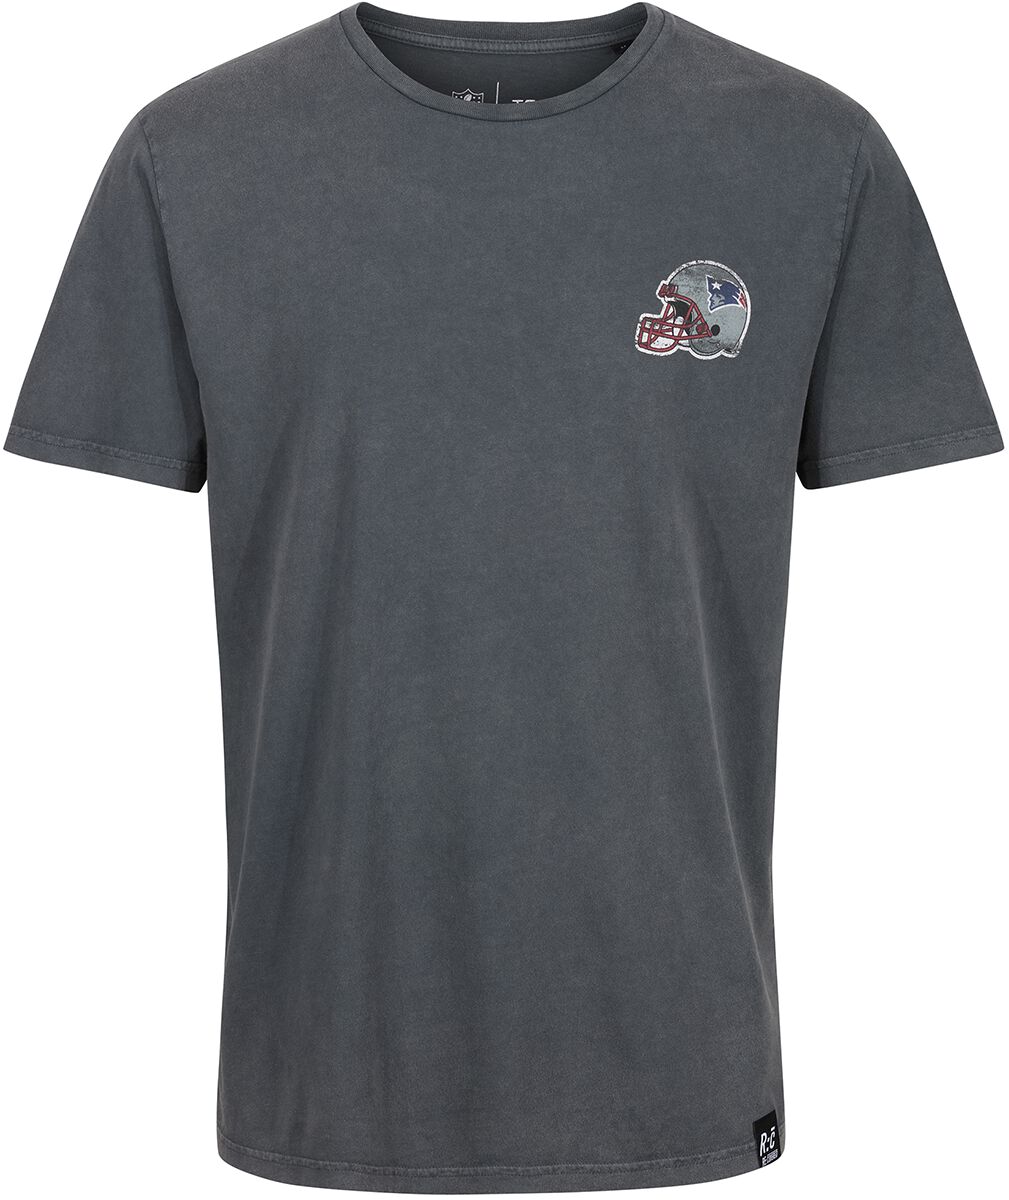 Recovered Clothing T-Shirt - NFL Patriots College Black Washed - S bis XXL - für Männer - Größe L - multicolor